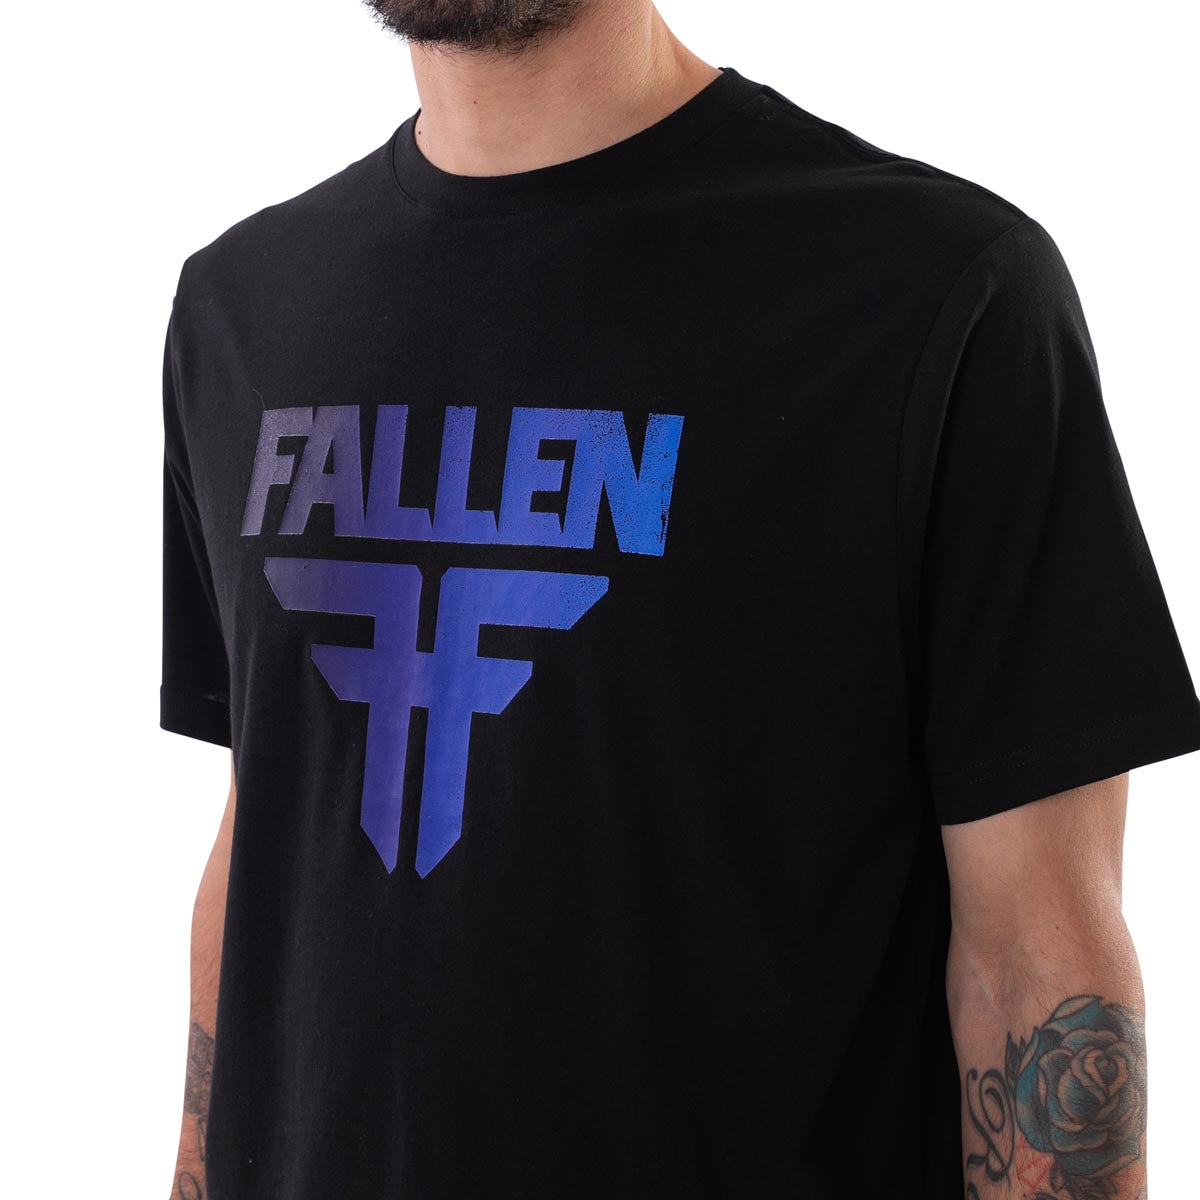 Fallen Insignia T-Shirt - Black/Purple image 3